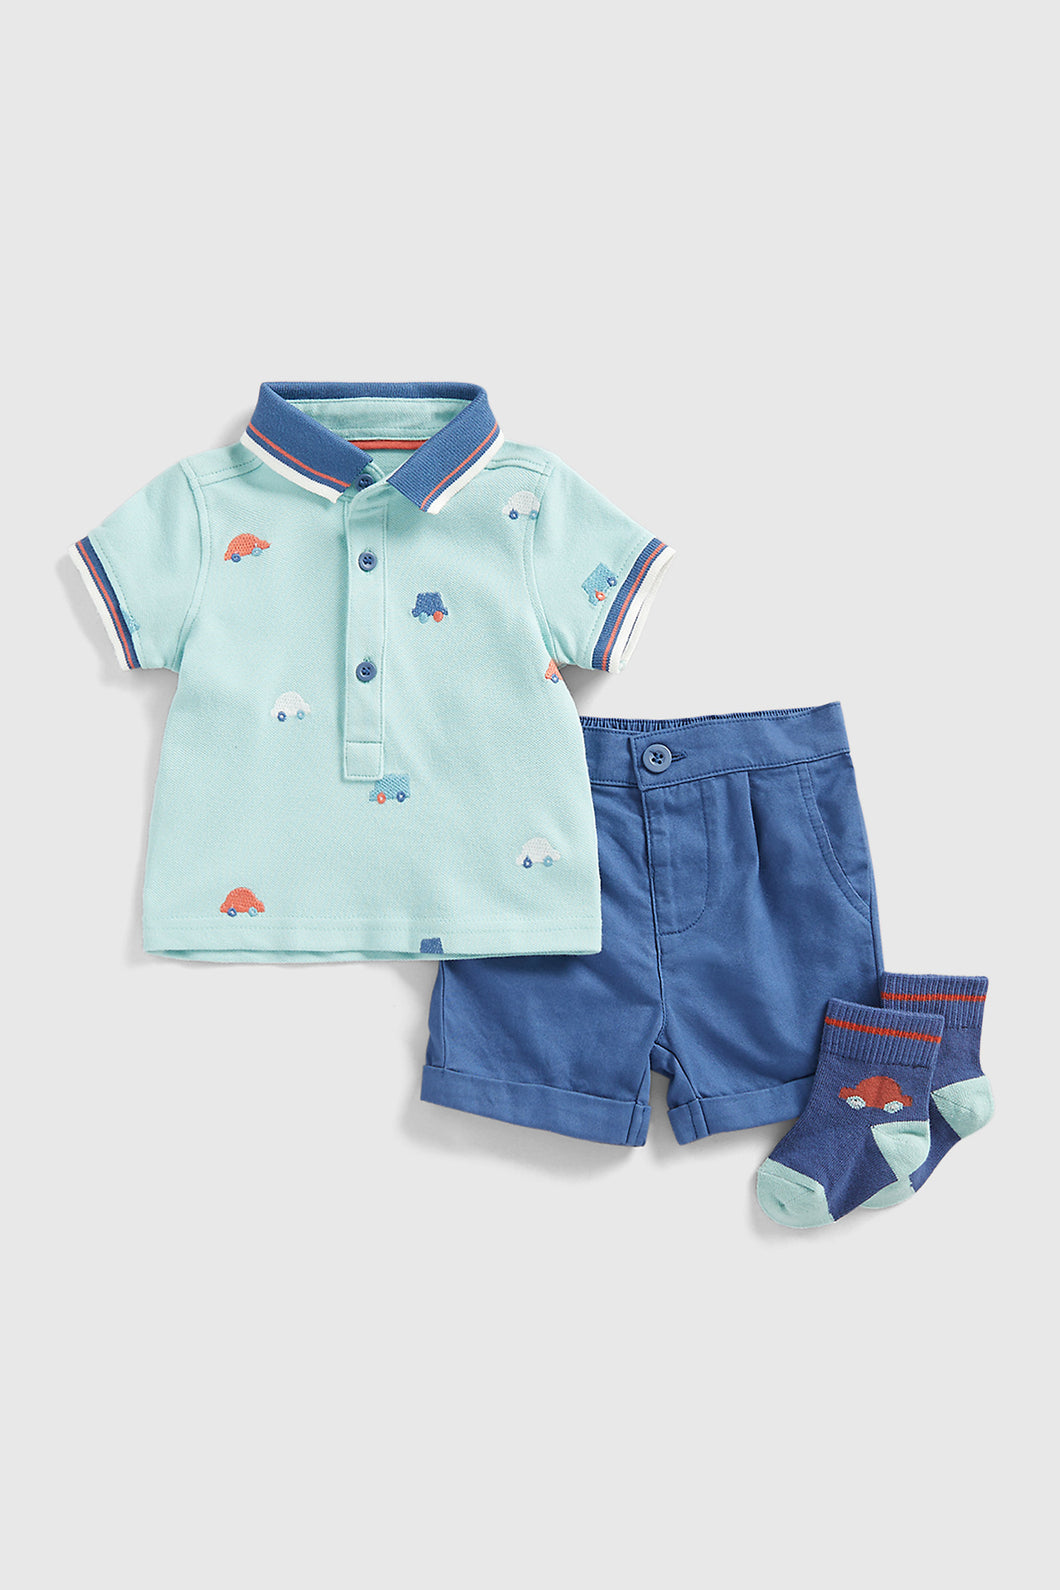 Mothercare Shorts, Polo Shirt and Socks Set